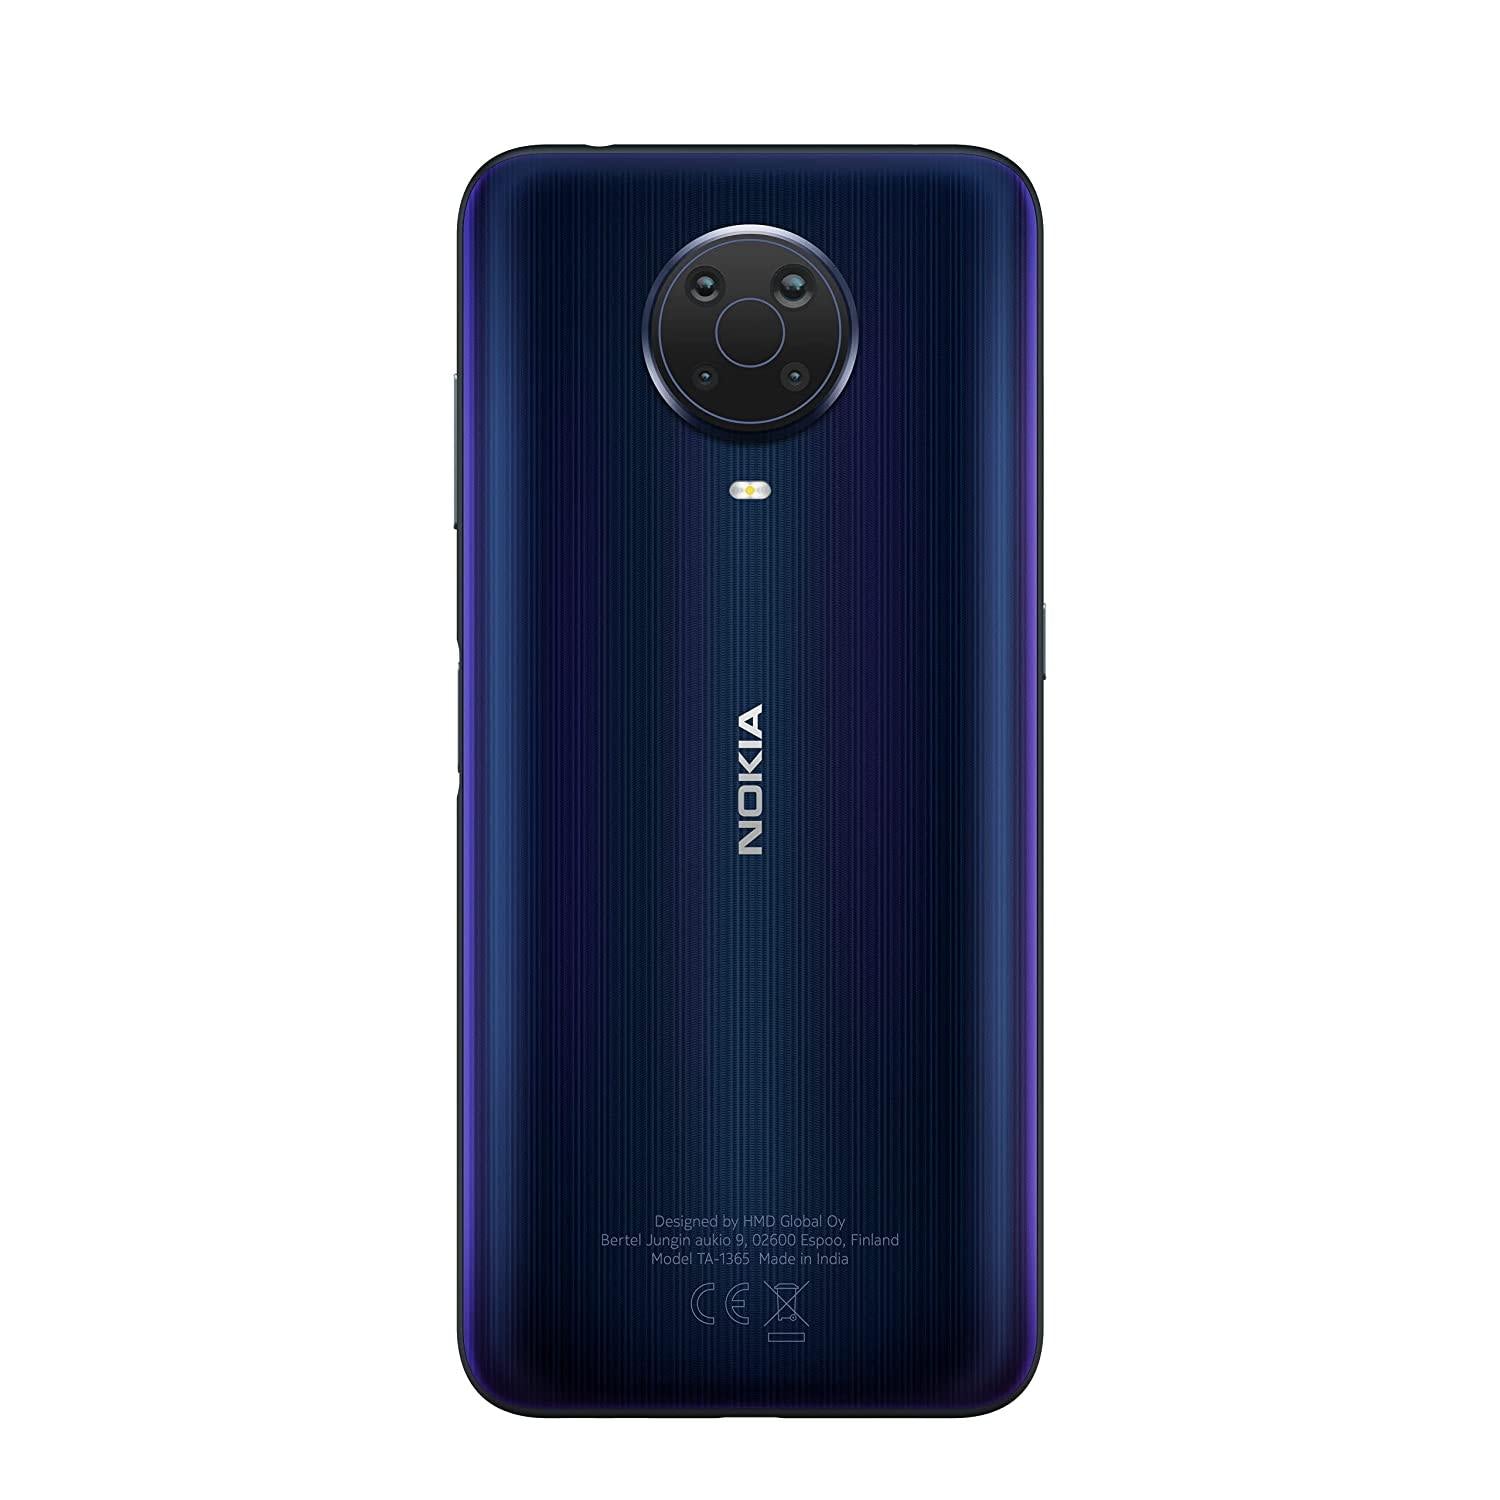 Nokia G20 Smartphone, Dual SIM 4G, 4GB RAM/64GB Storage-Mobile Phones-dealsplant